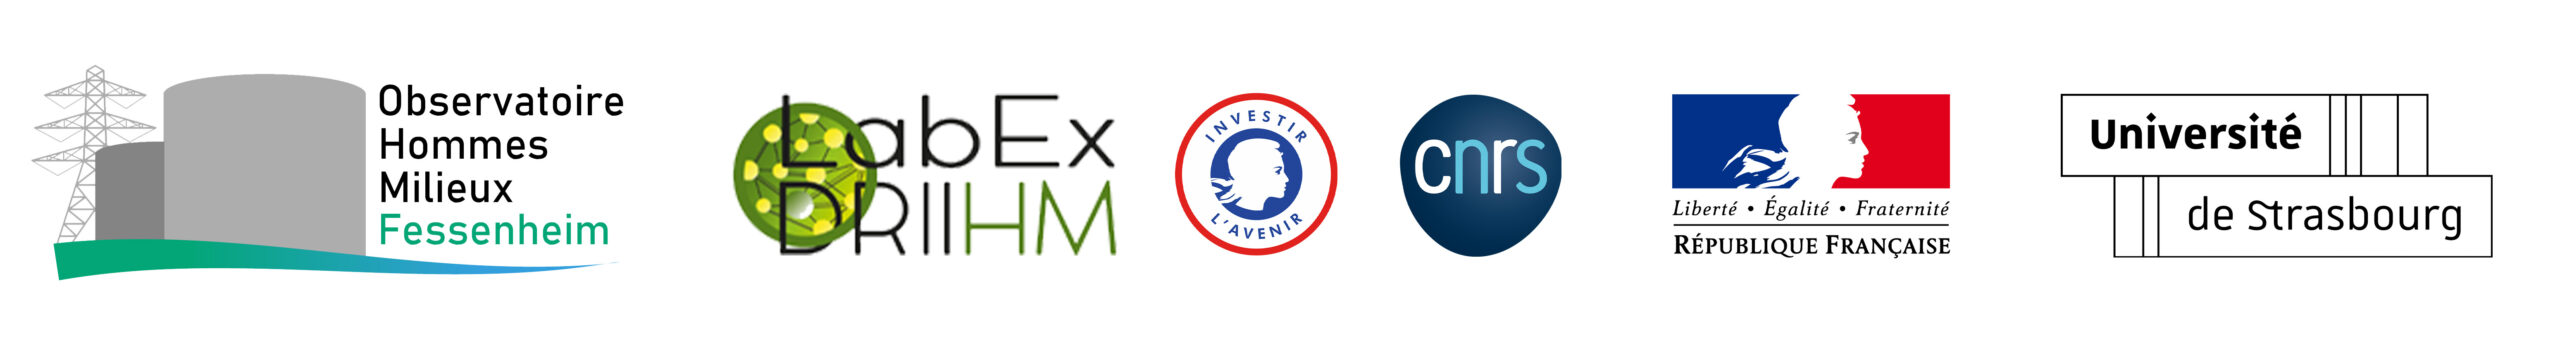 logos organismes financeurs